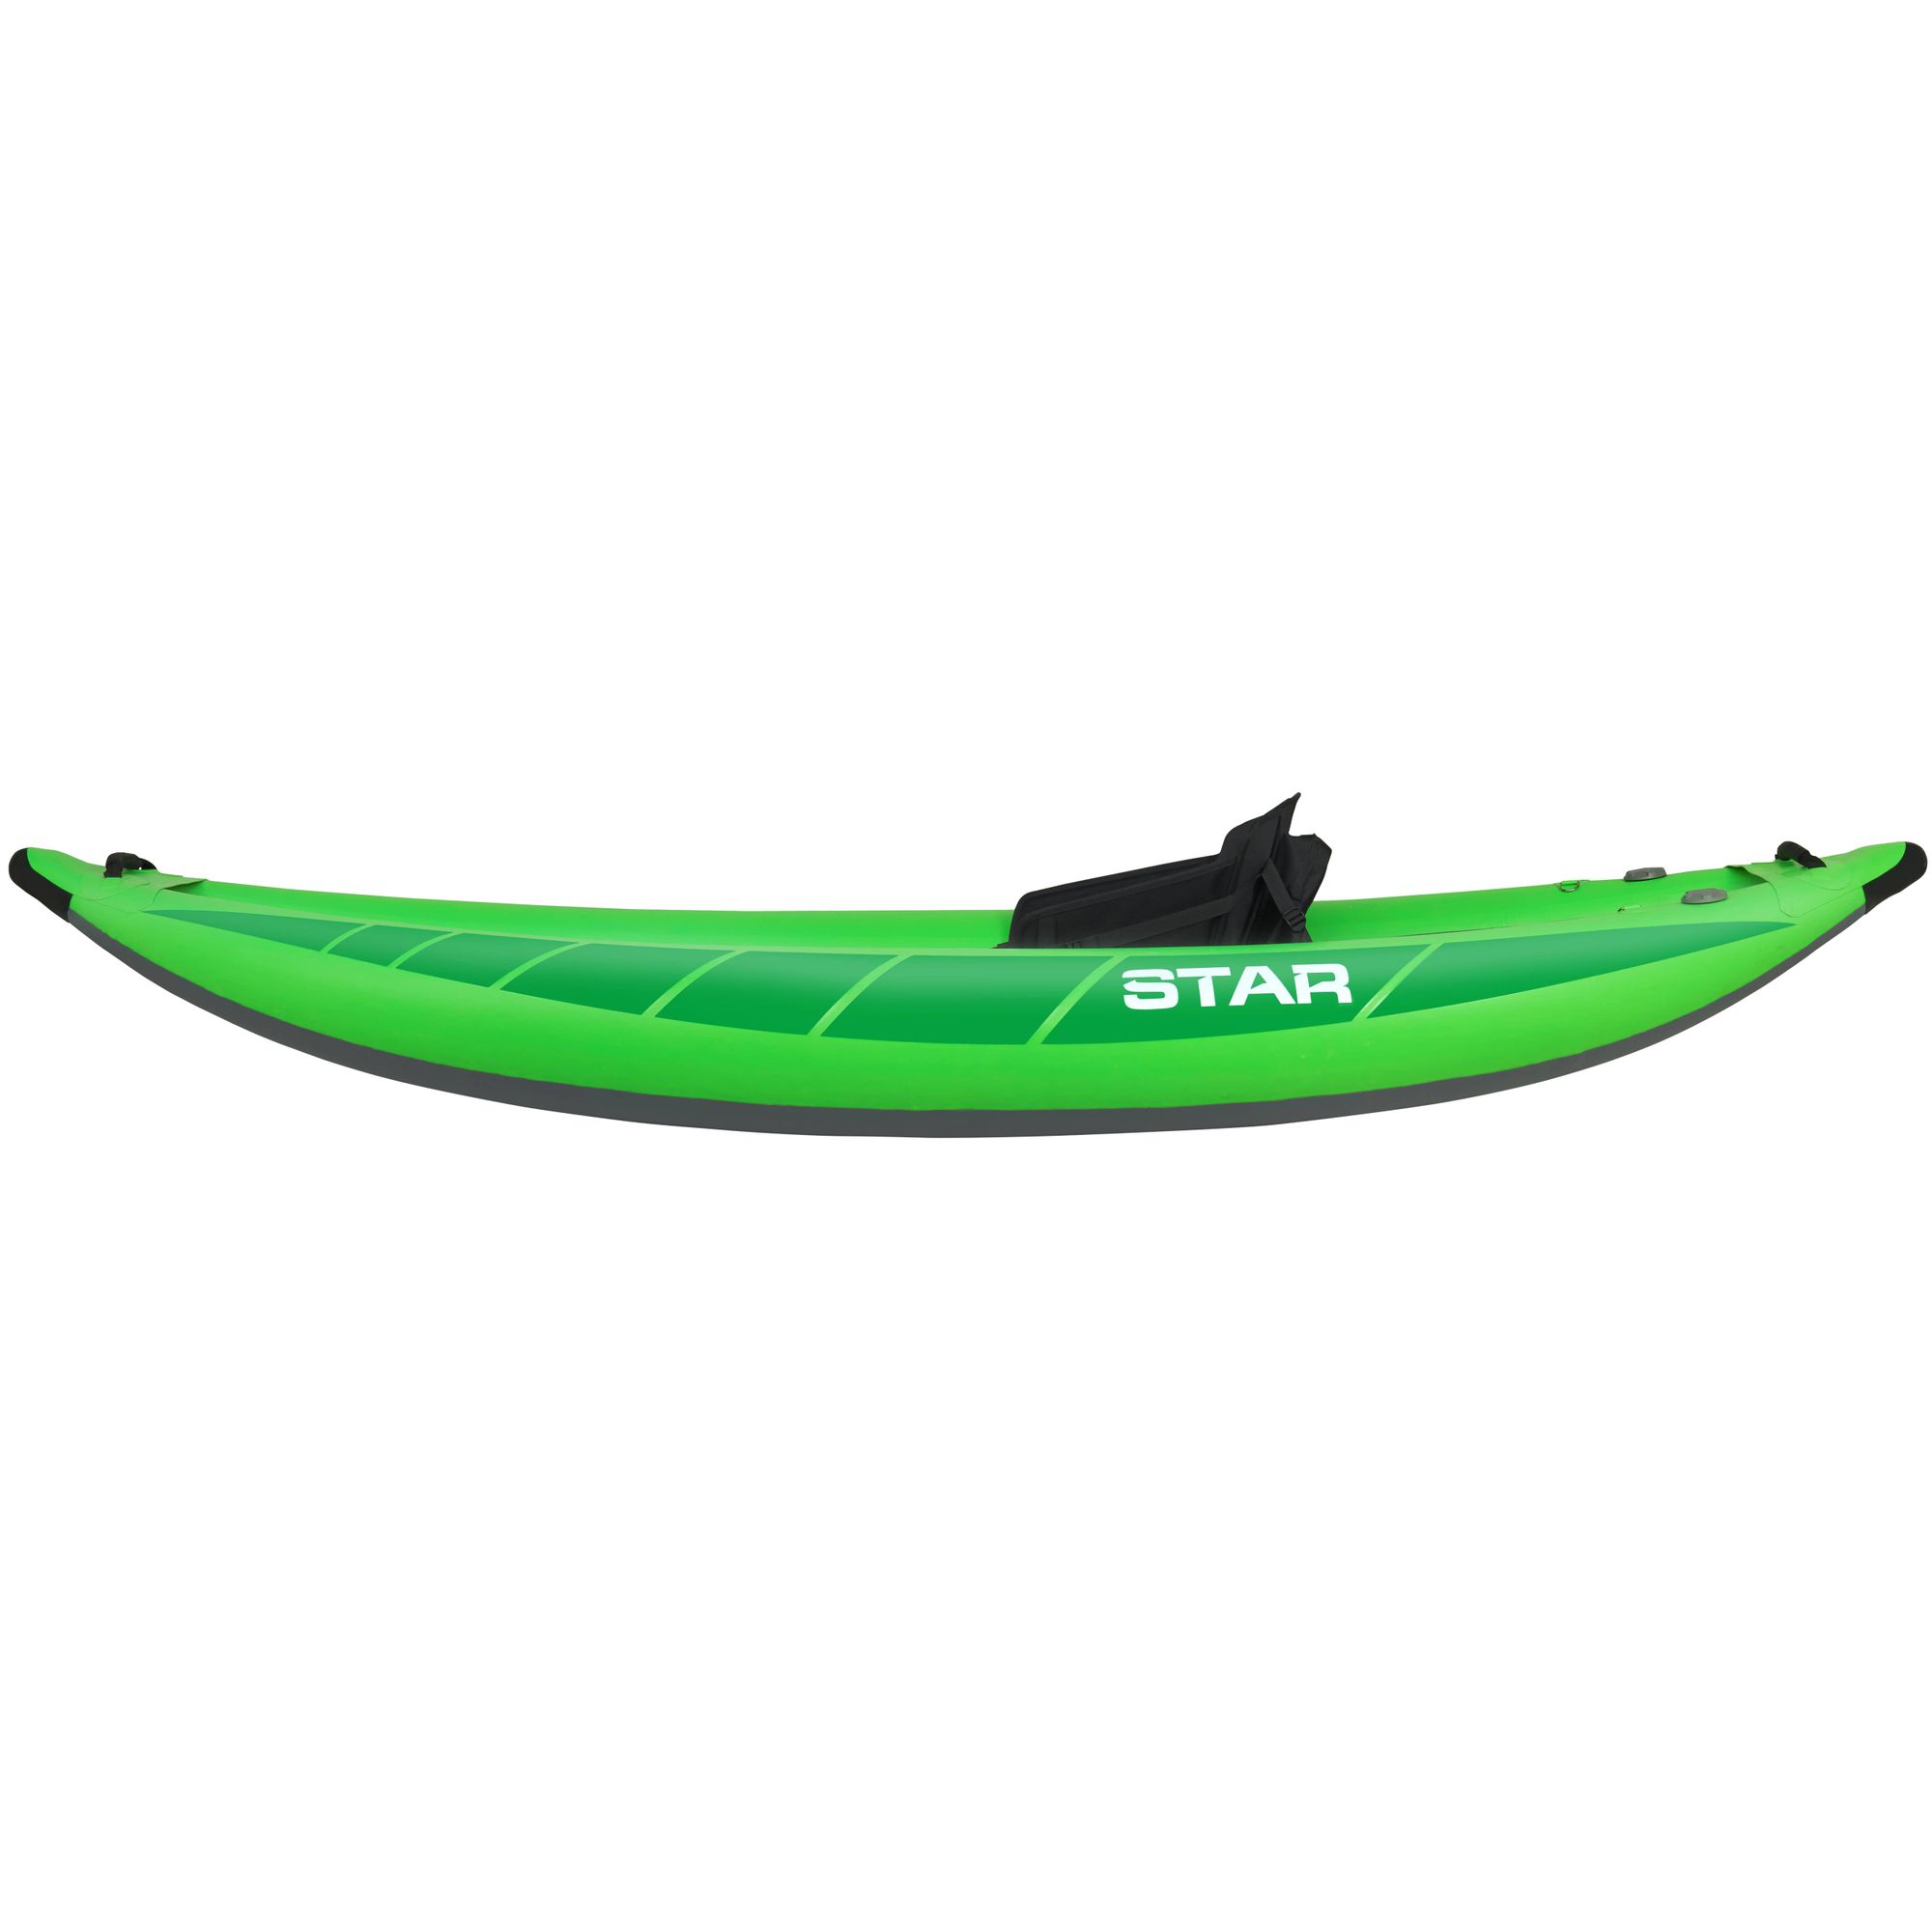 STAR Raven I Inflatable Kayak aufblasbares Luftkajak 